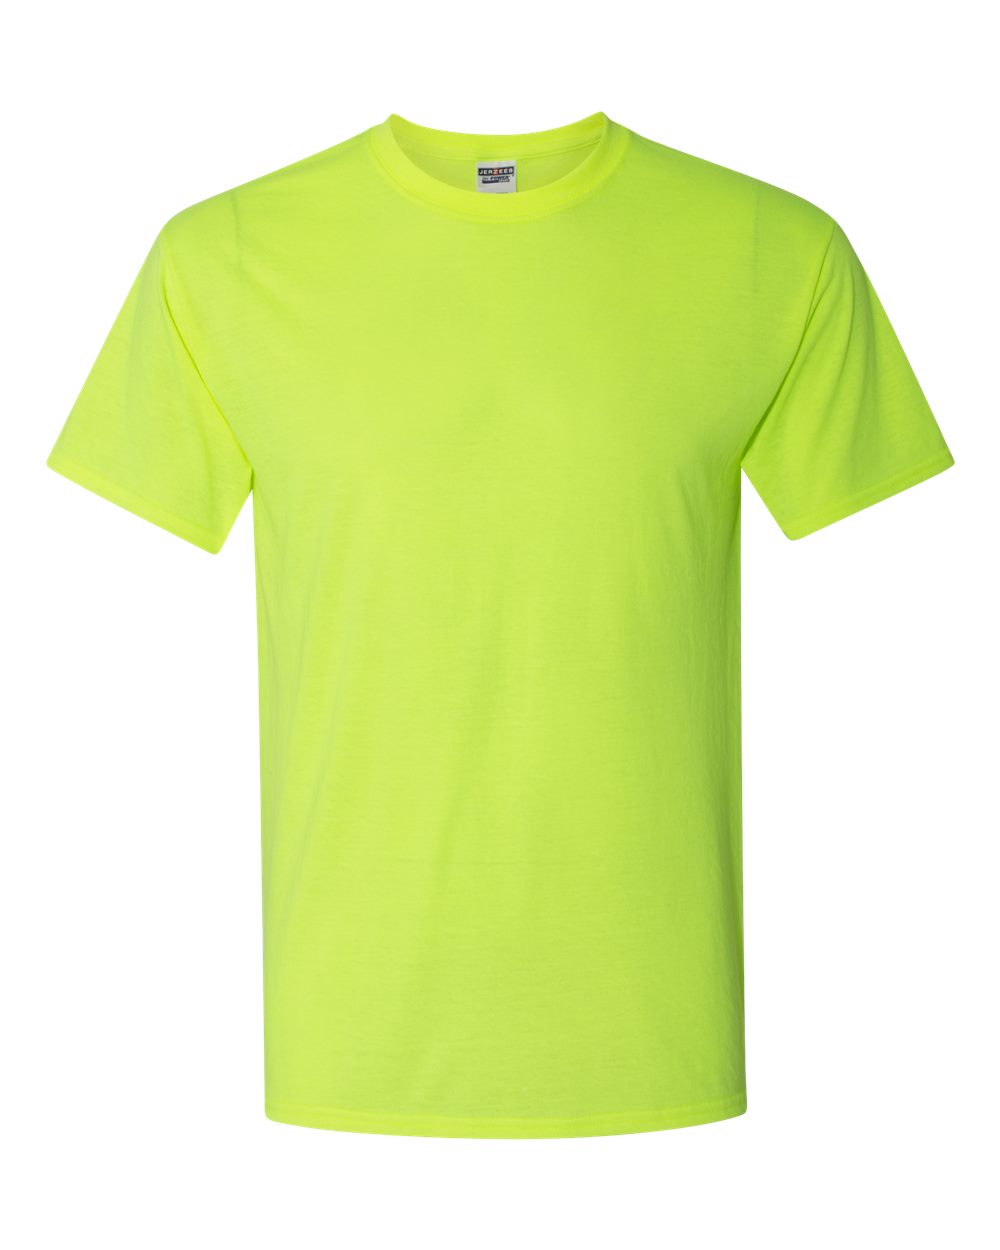 JERZEES - Dri-Power® Performance Short Sleeve T-Shirt - 21MR - BULK SALE - QTY 4 $14.00